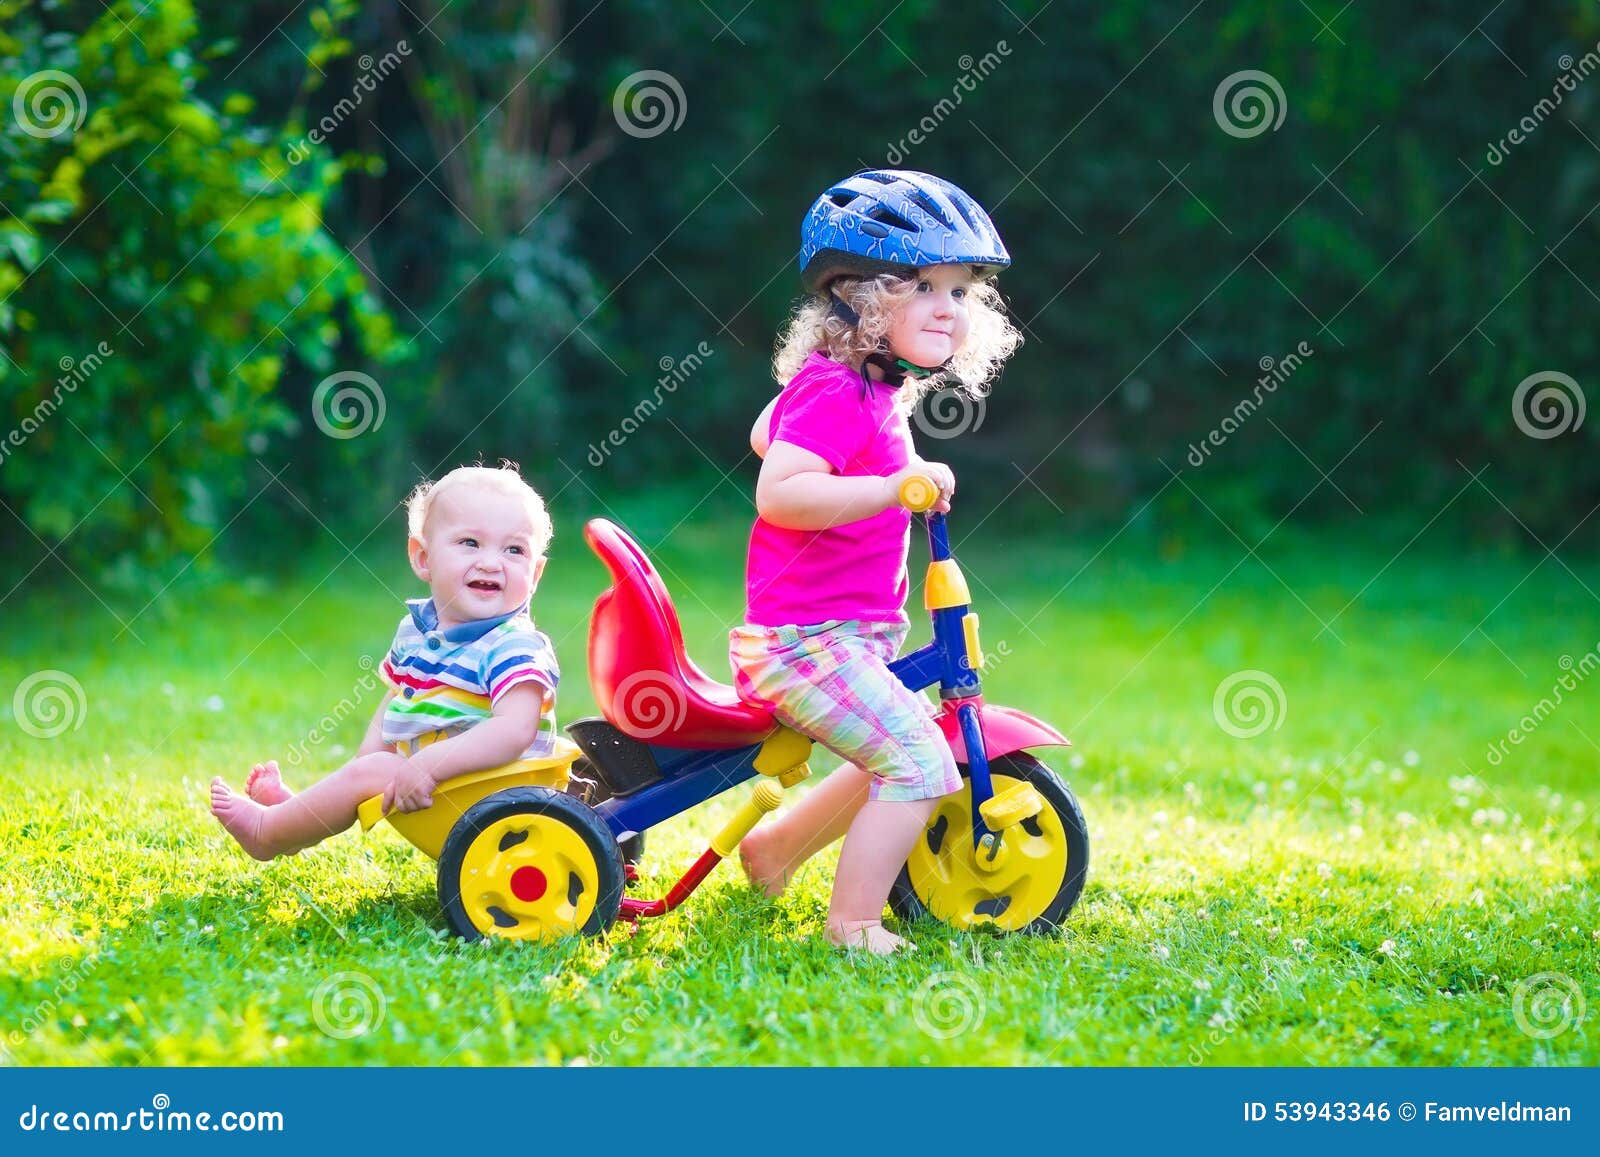 two kids on a bike